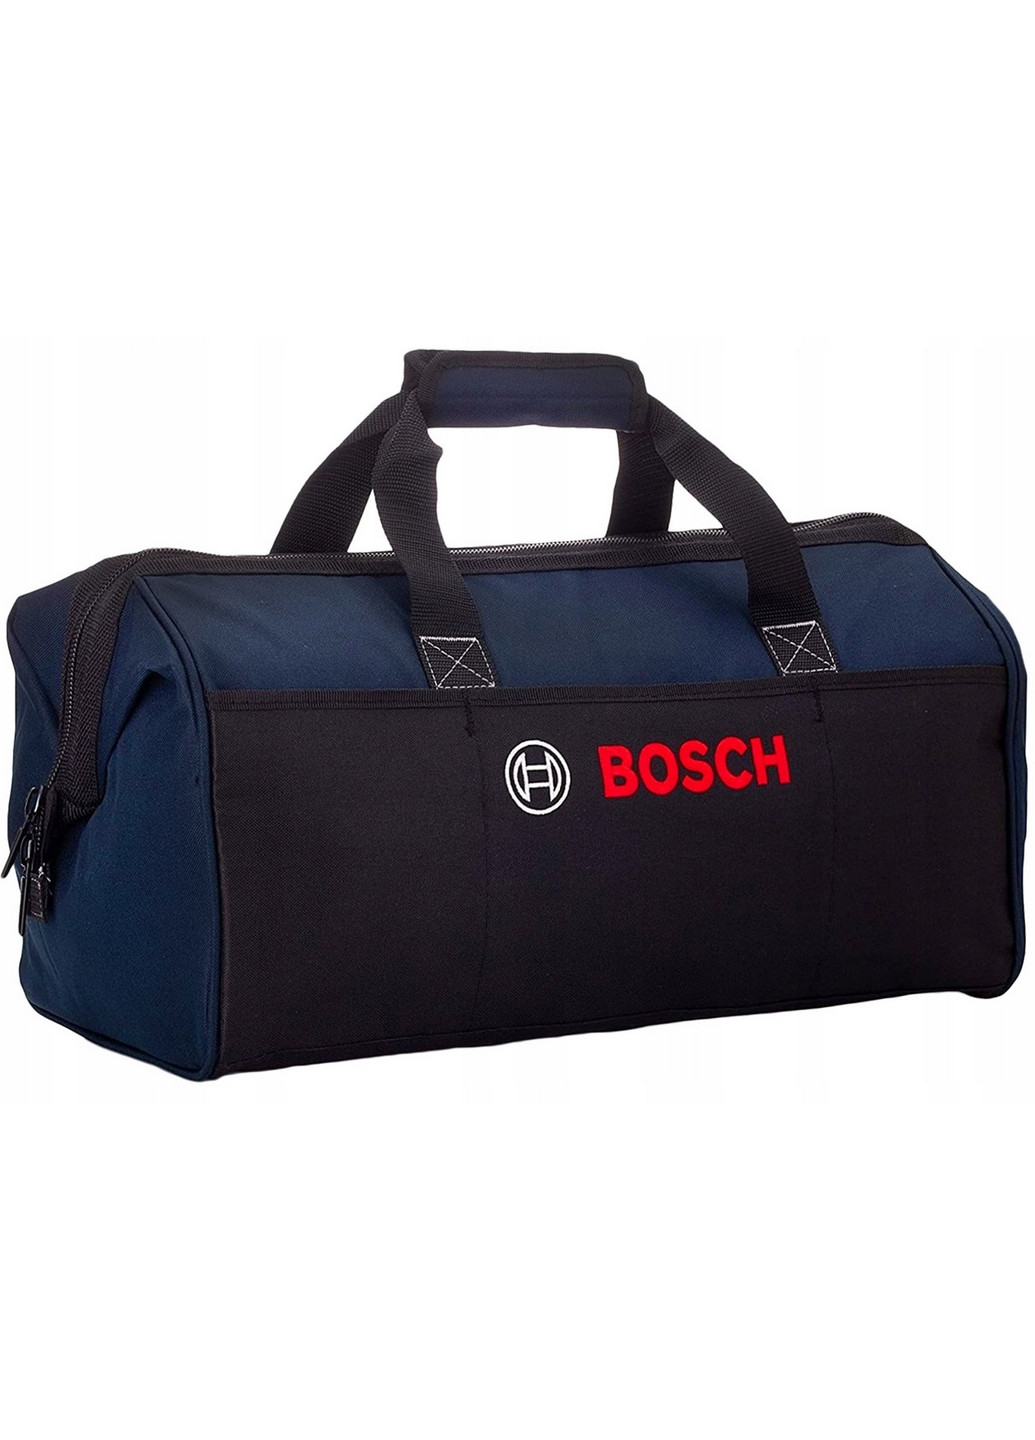 Робоча сумка для інструментів Bosch (276980907)